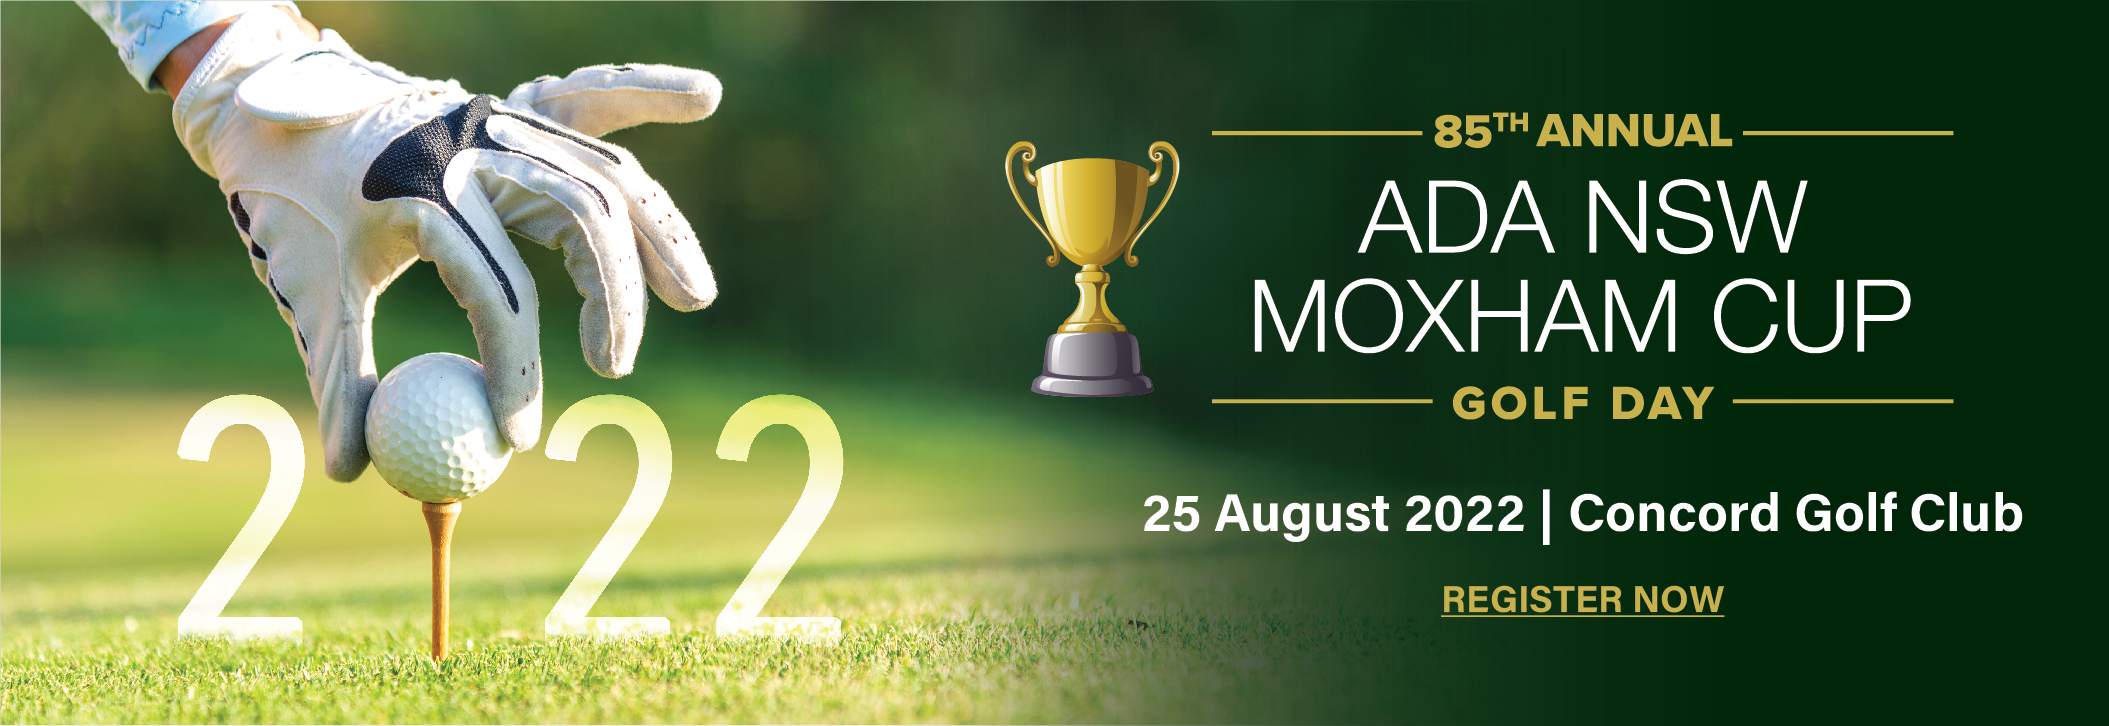 ADA NSW 85th Annual Moxham Cup Golf Day